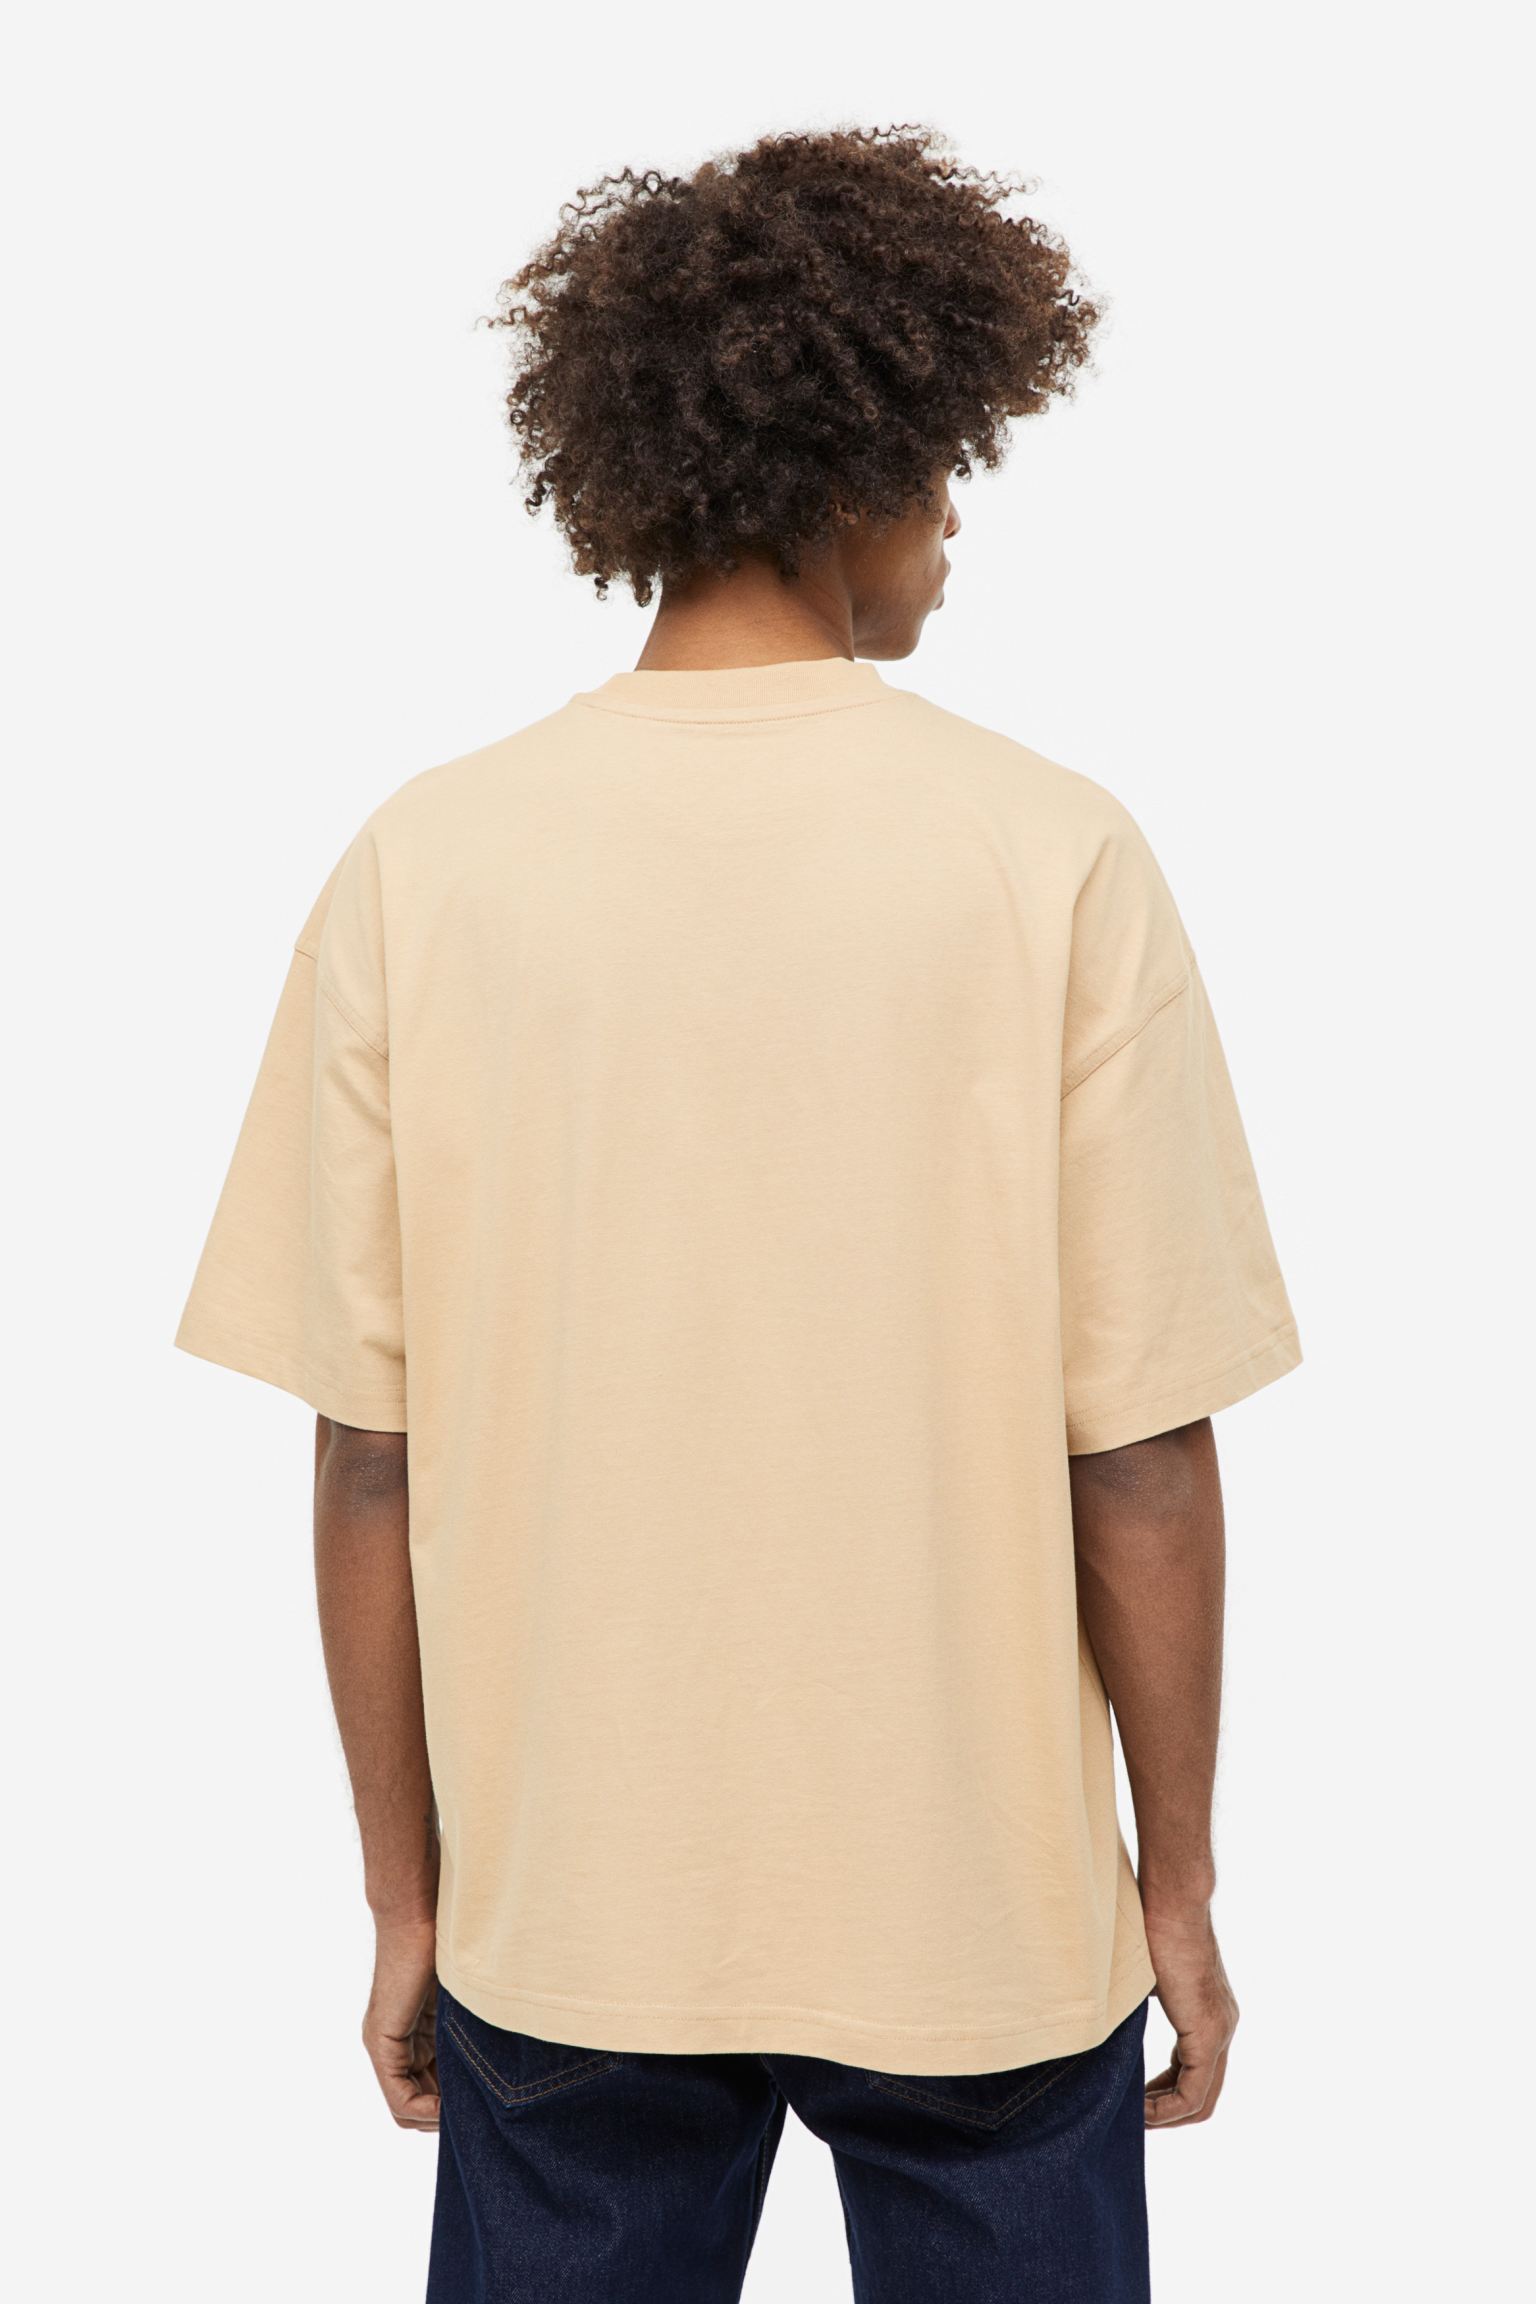 Beige Solid Oversized T-shirt for Men - Hawkz Lifestyle